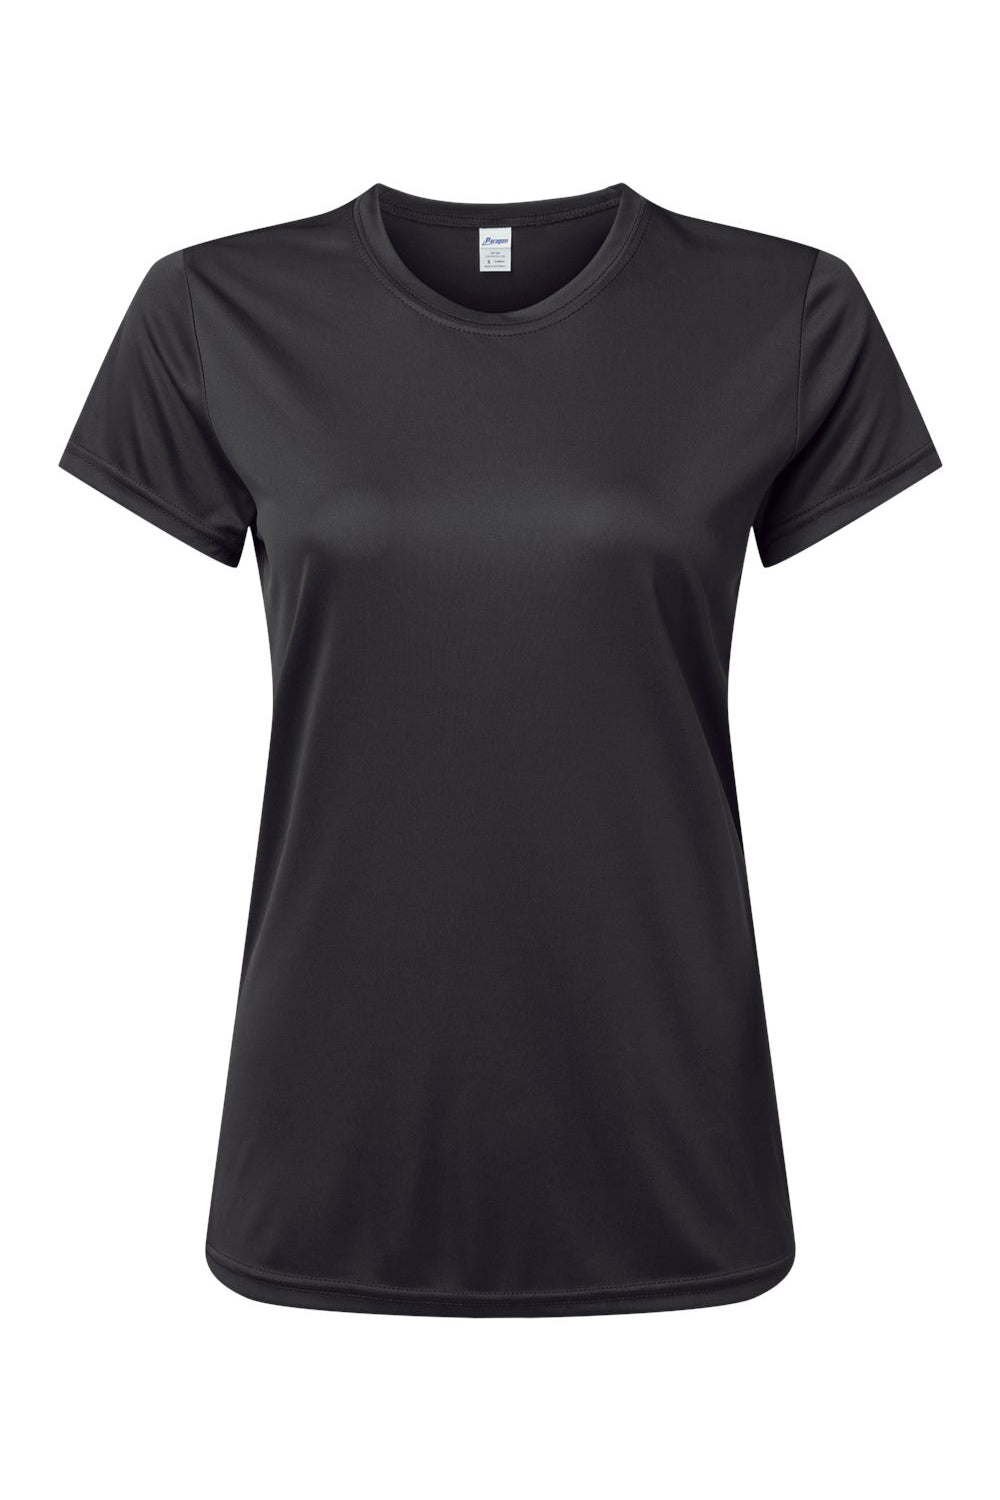 Paragon 204 Womens Islander Performance Short Sleeve Crewneck T-Shirt Black Flat Front